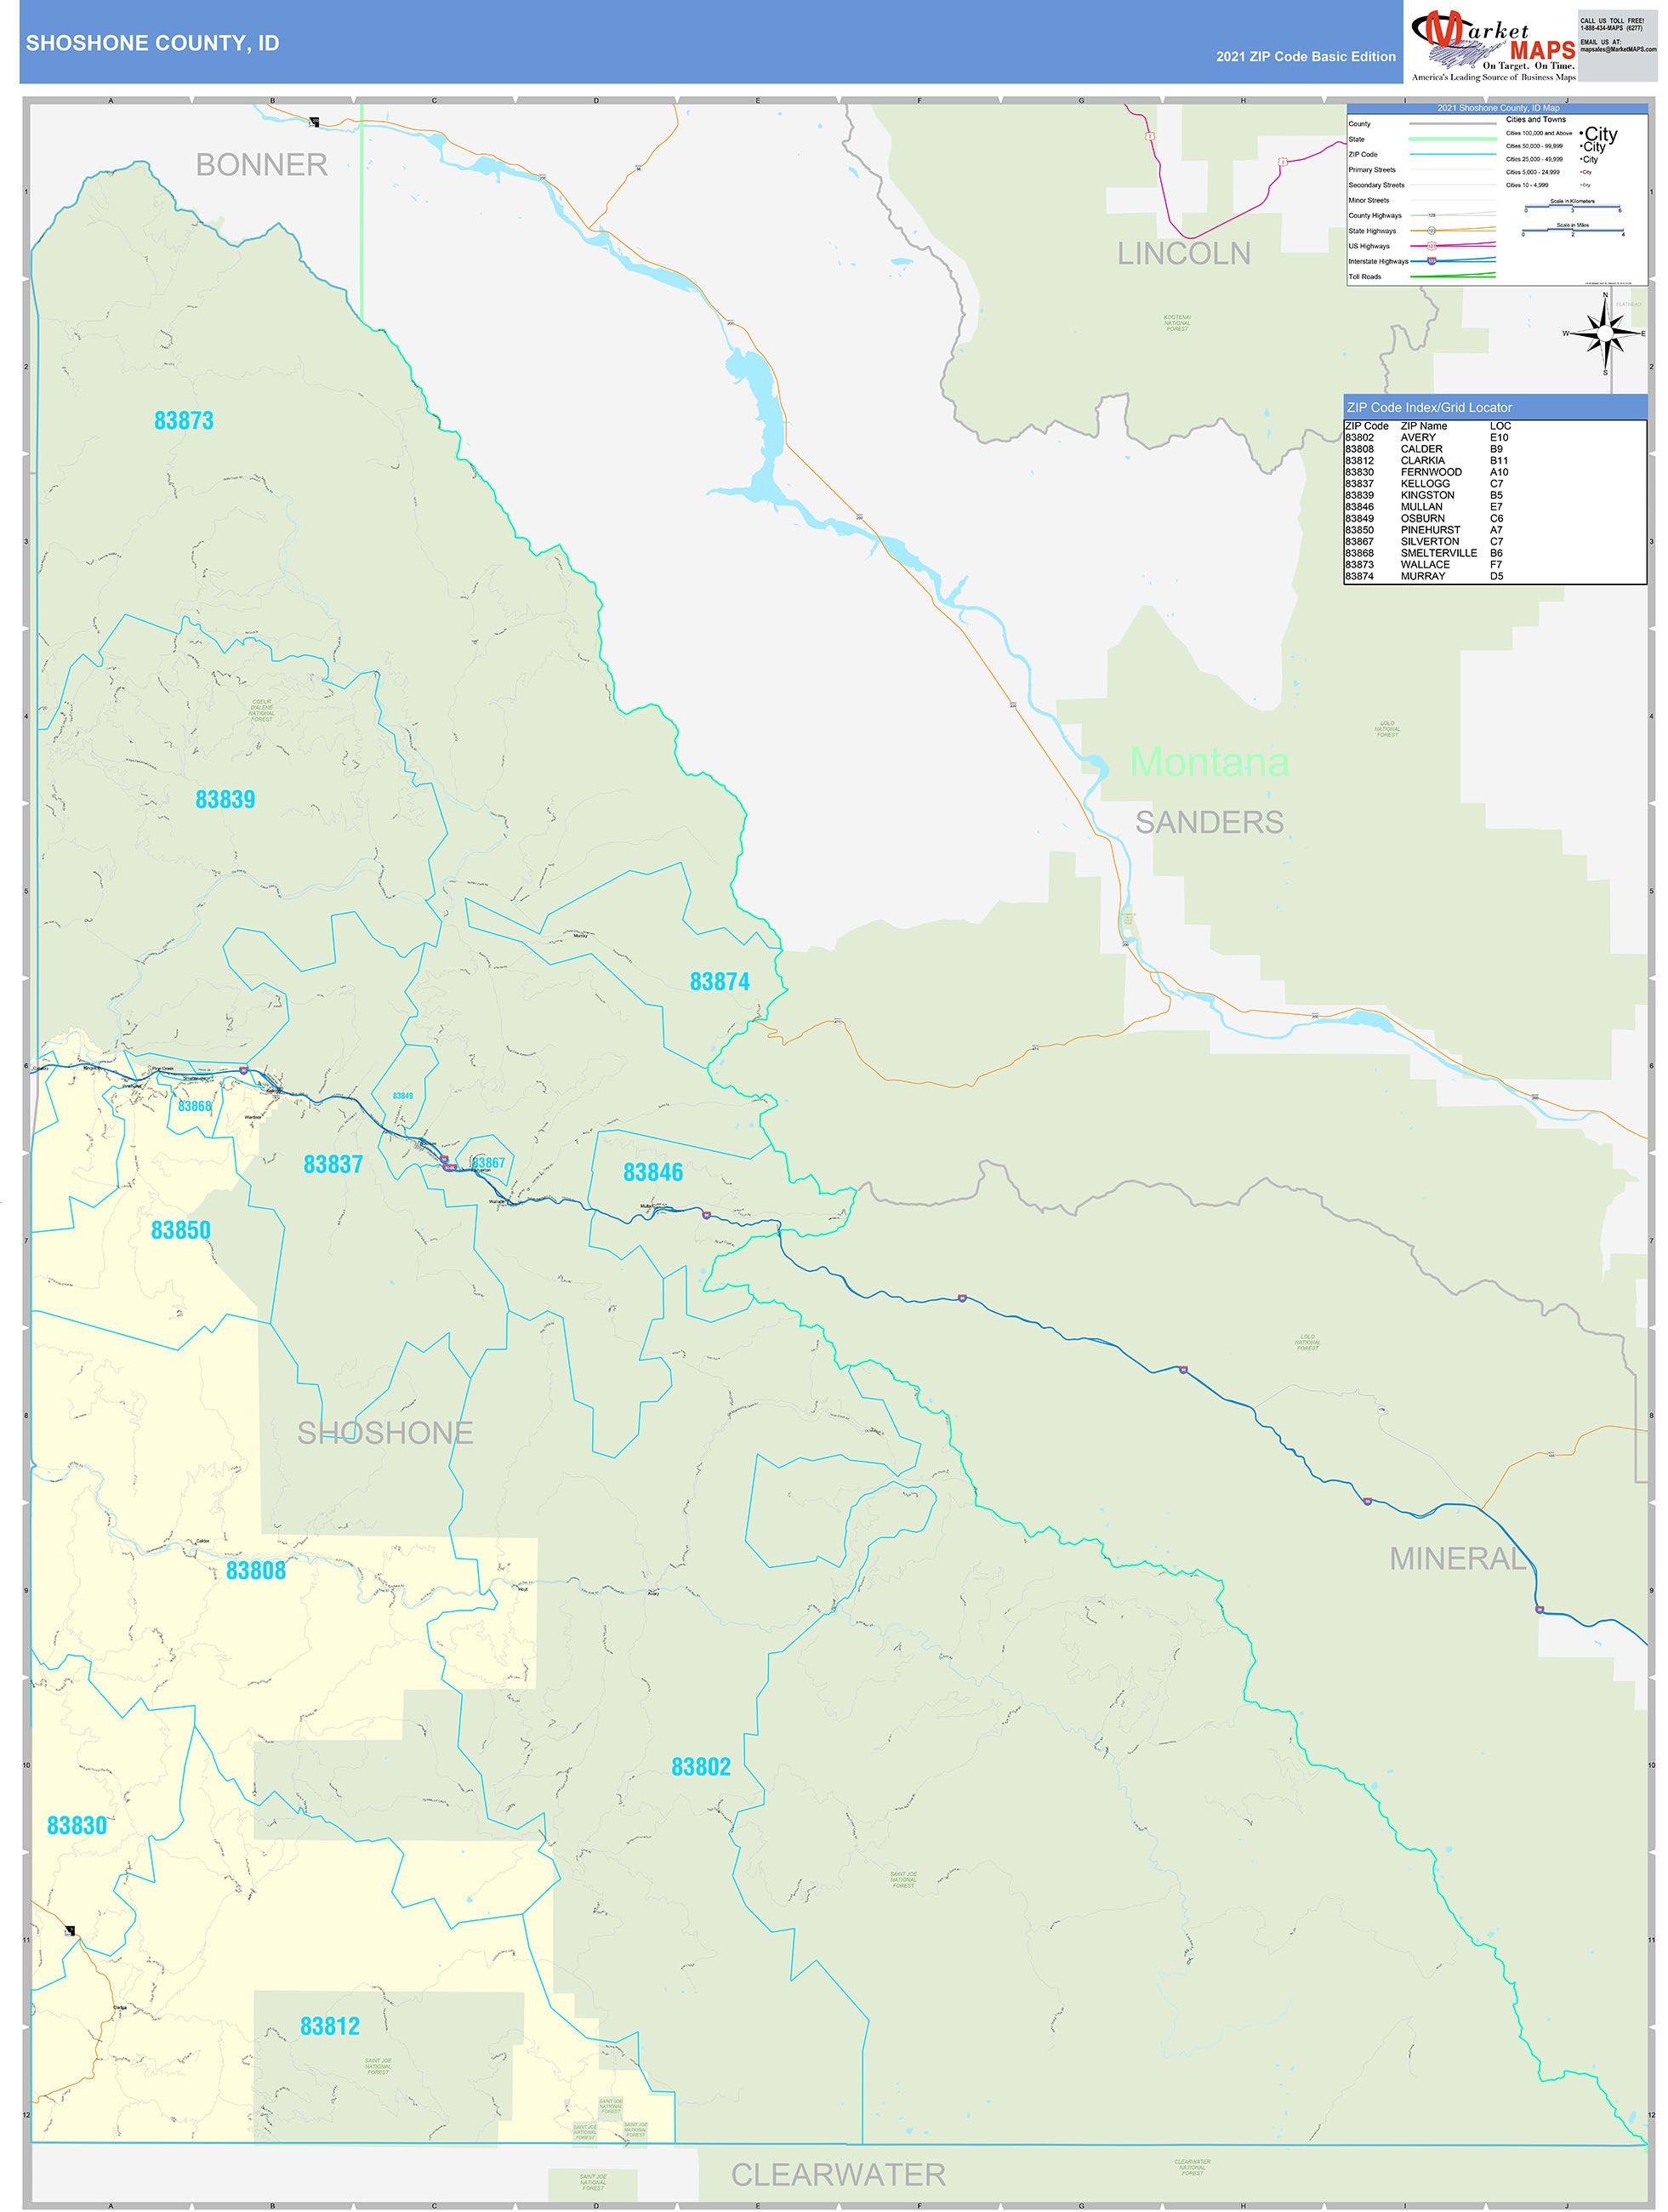 Shoshone County, ID Zip Code Wall Map Basic Style by MarketMAPS MapSales